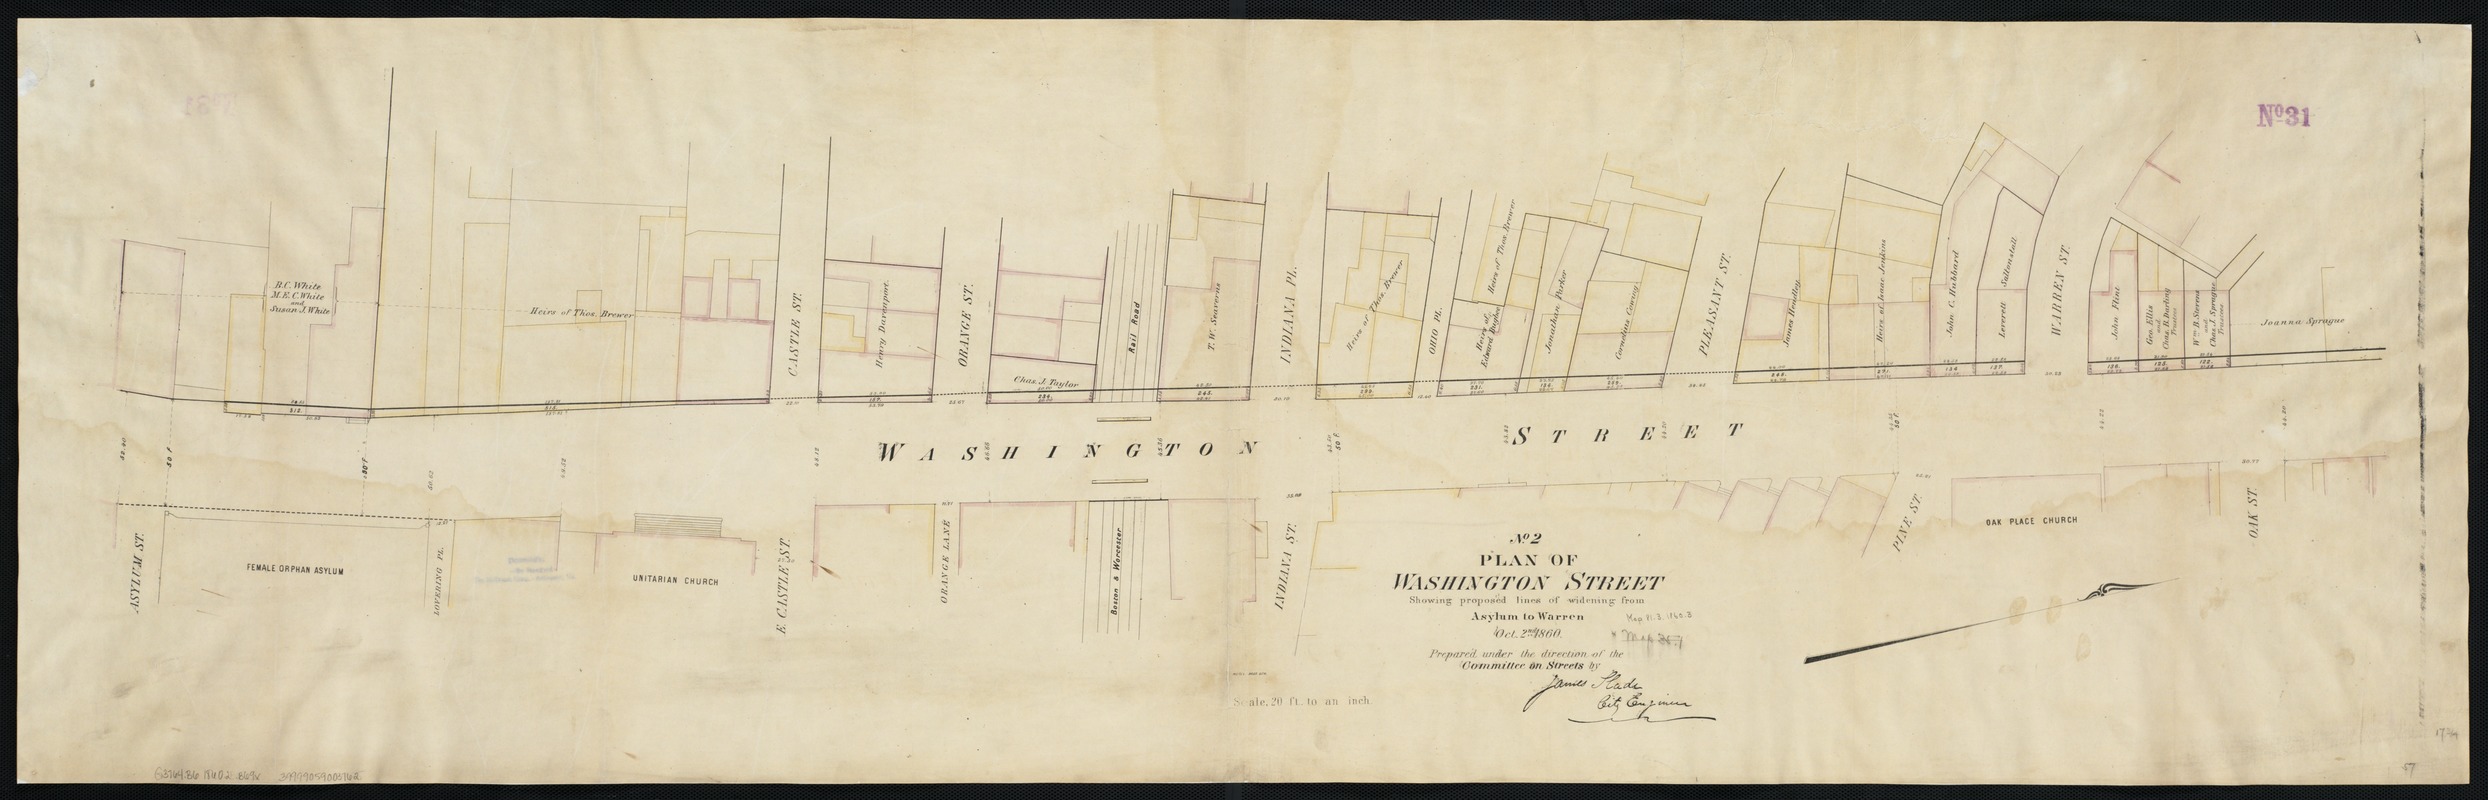 Plan of Washington Street showing proposed lines of widening from Asylum to Warren